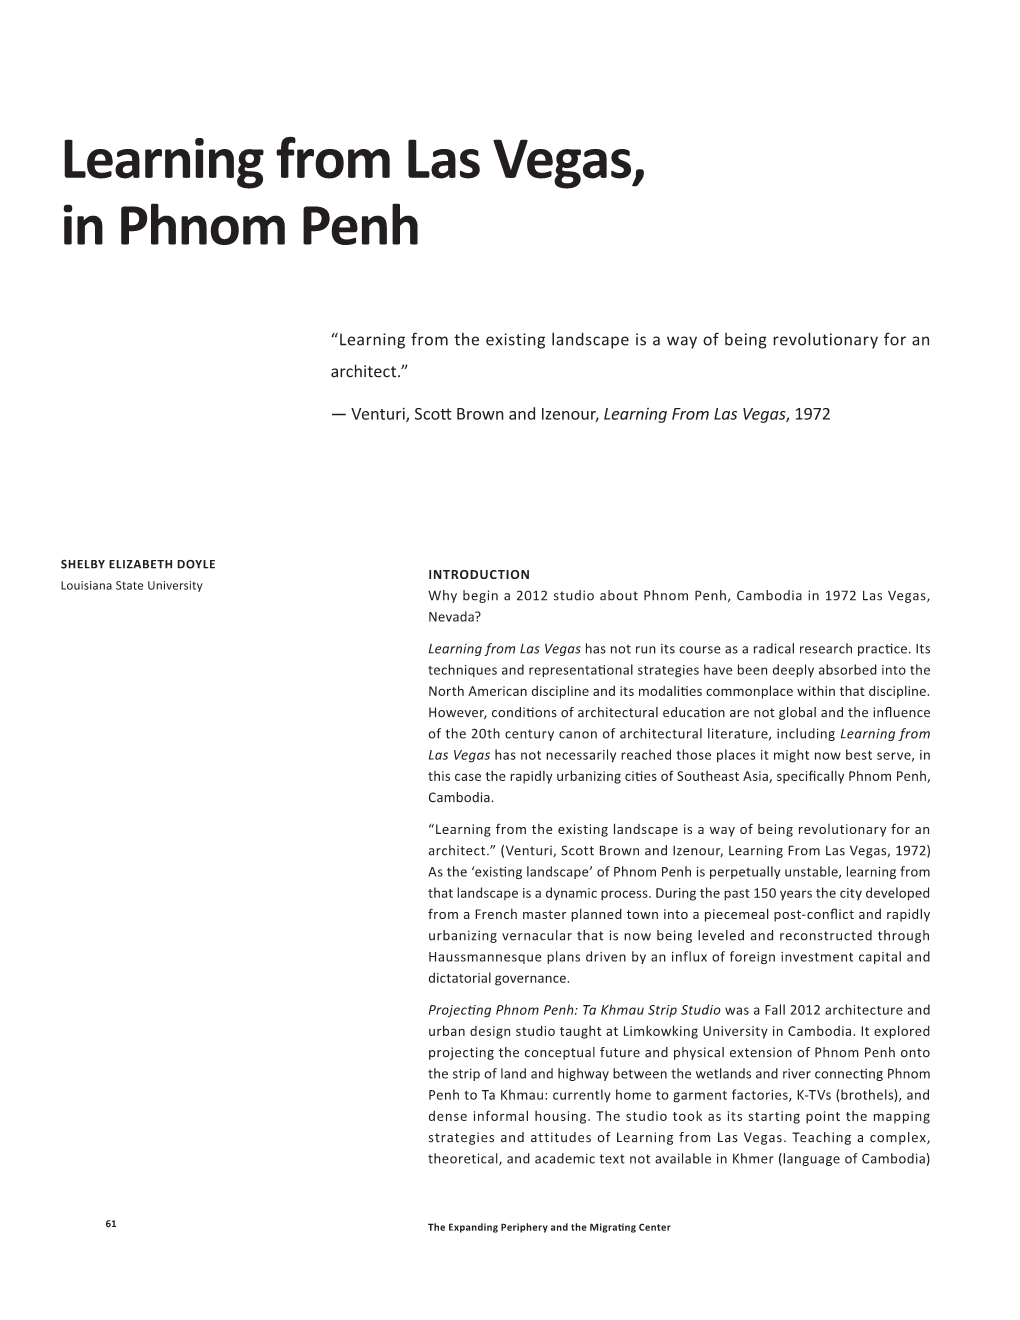 Learning from Las Vegas, in Phnom Penh